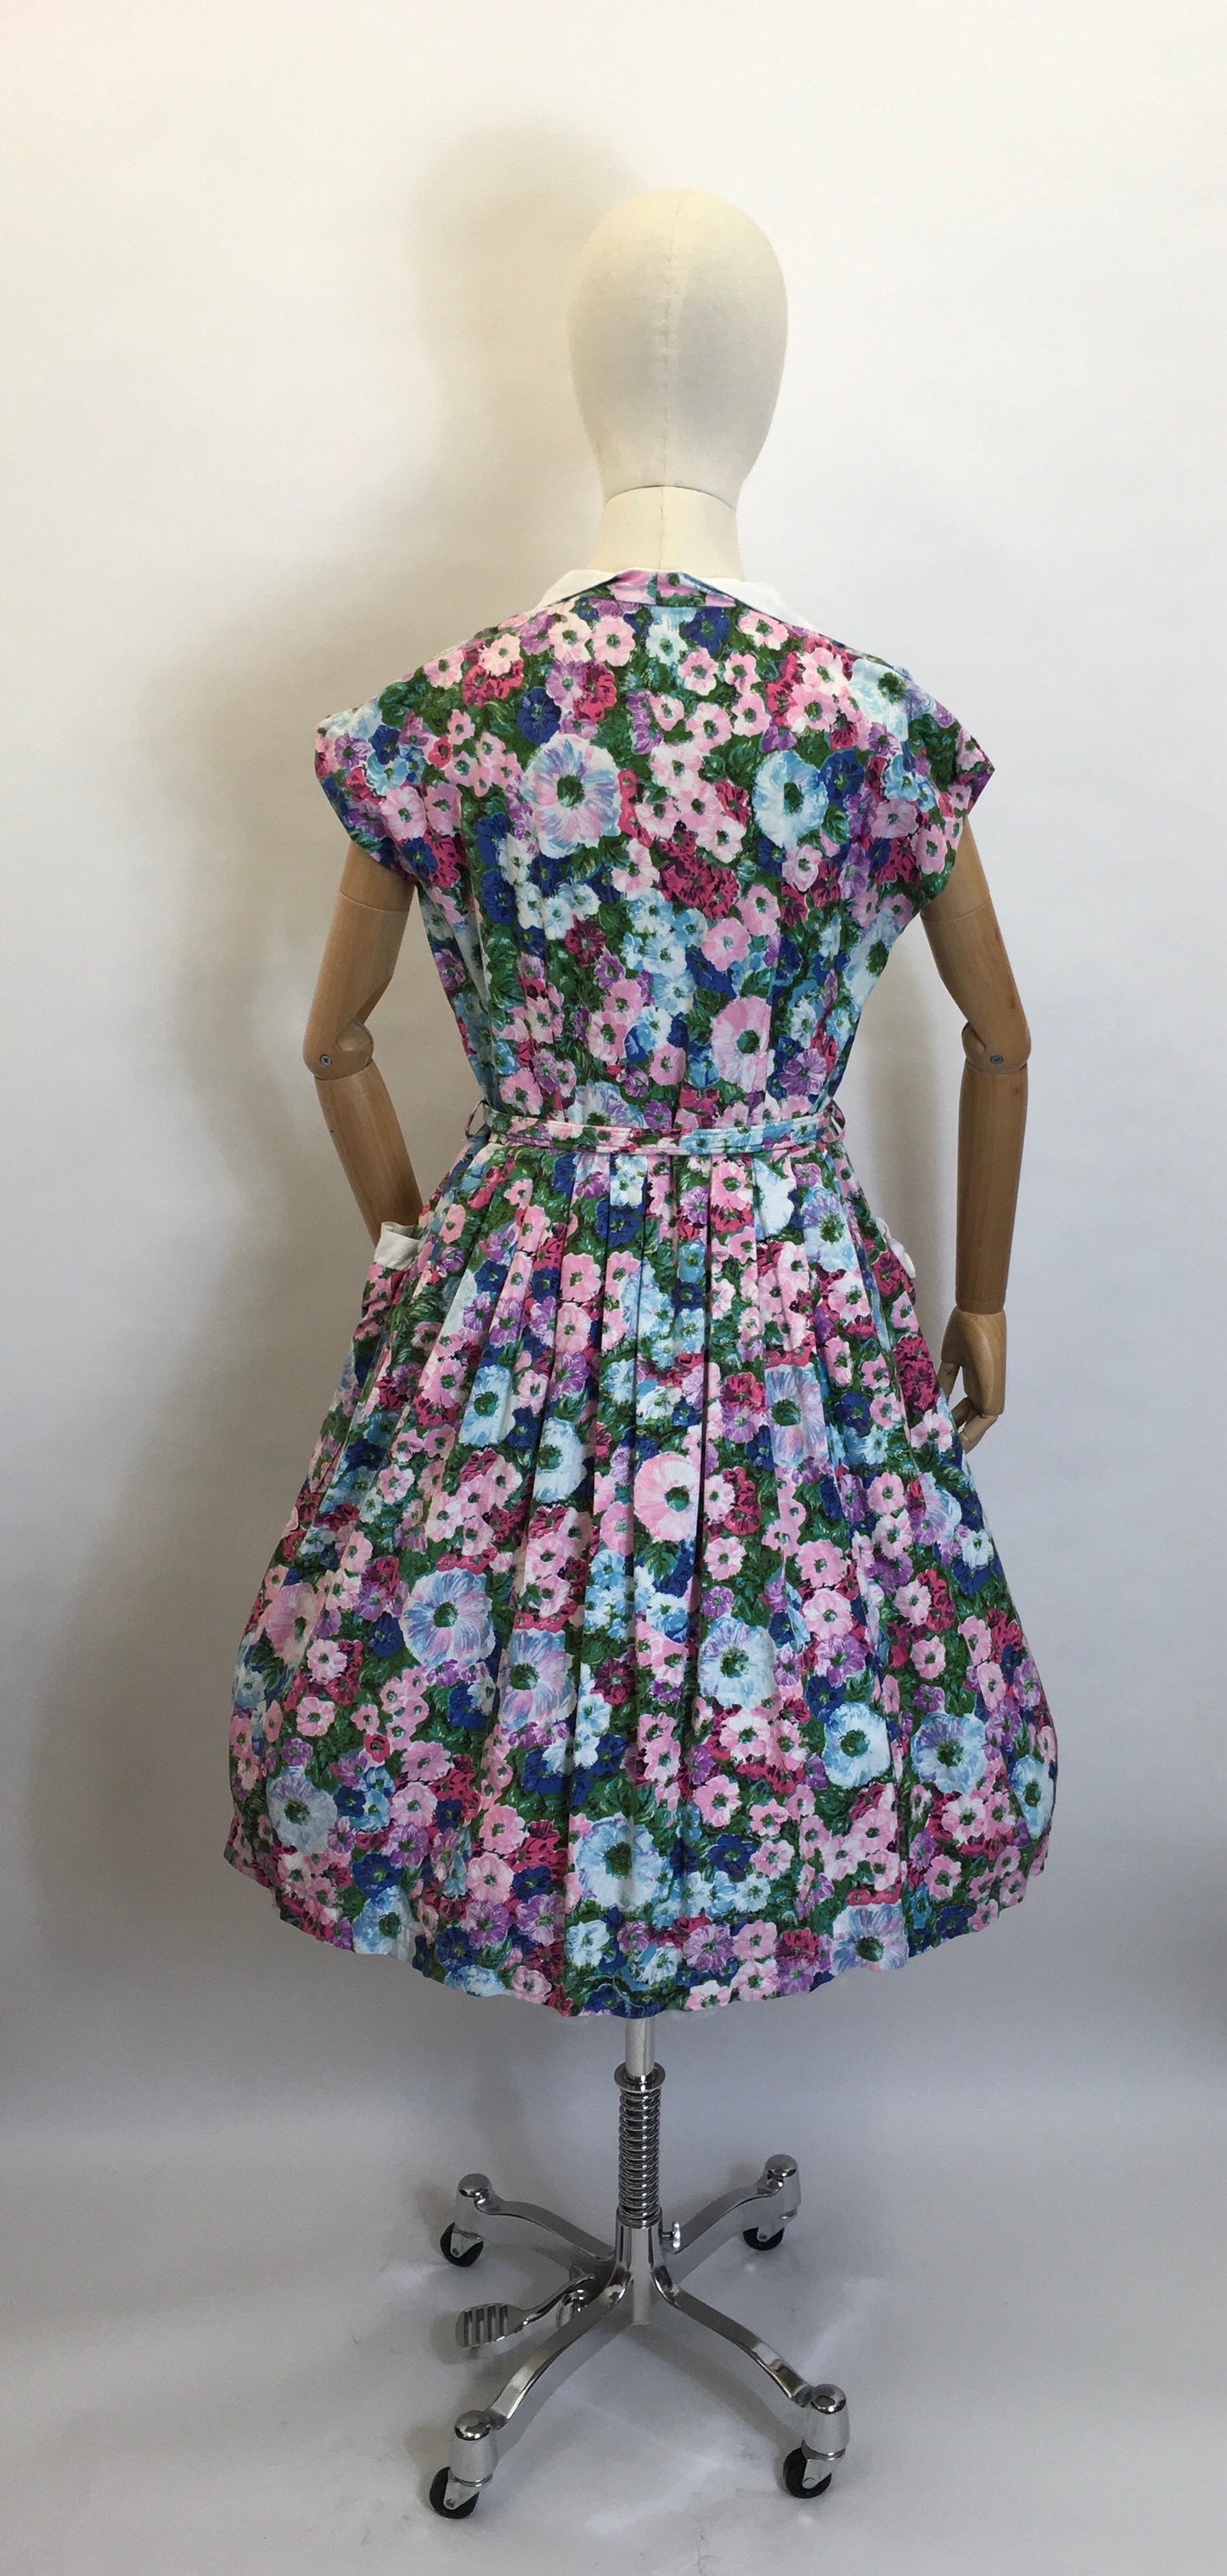 Original 1950's Floral Cotton Day Dress - Fabulous Collar and Big Pockets